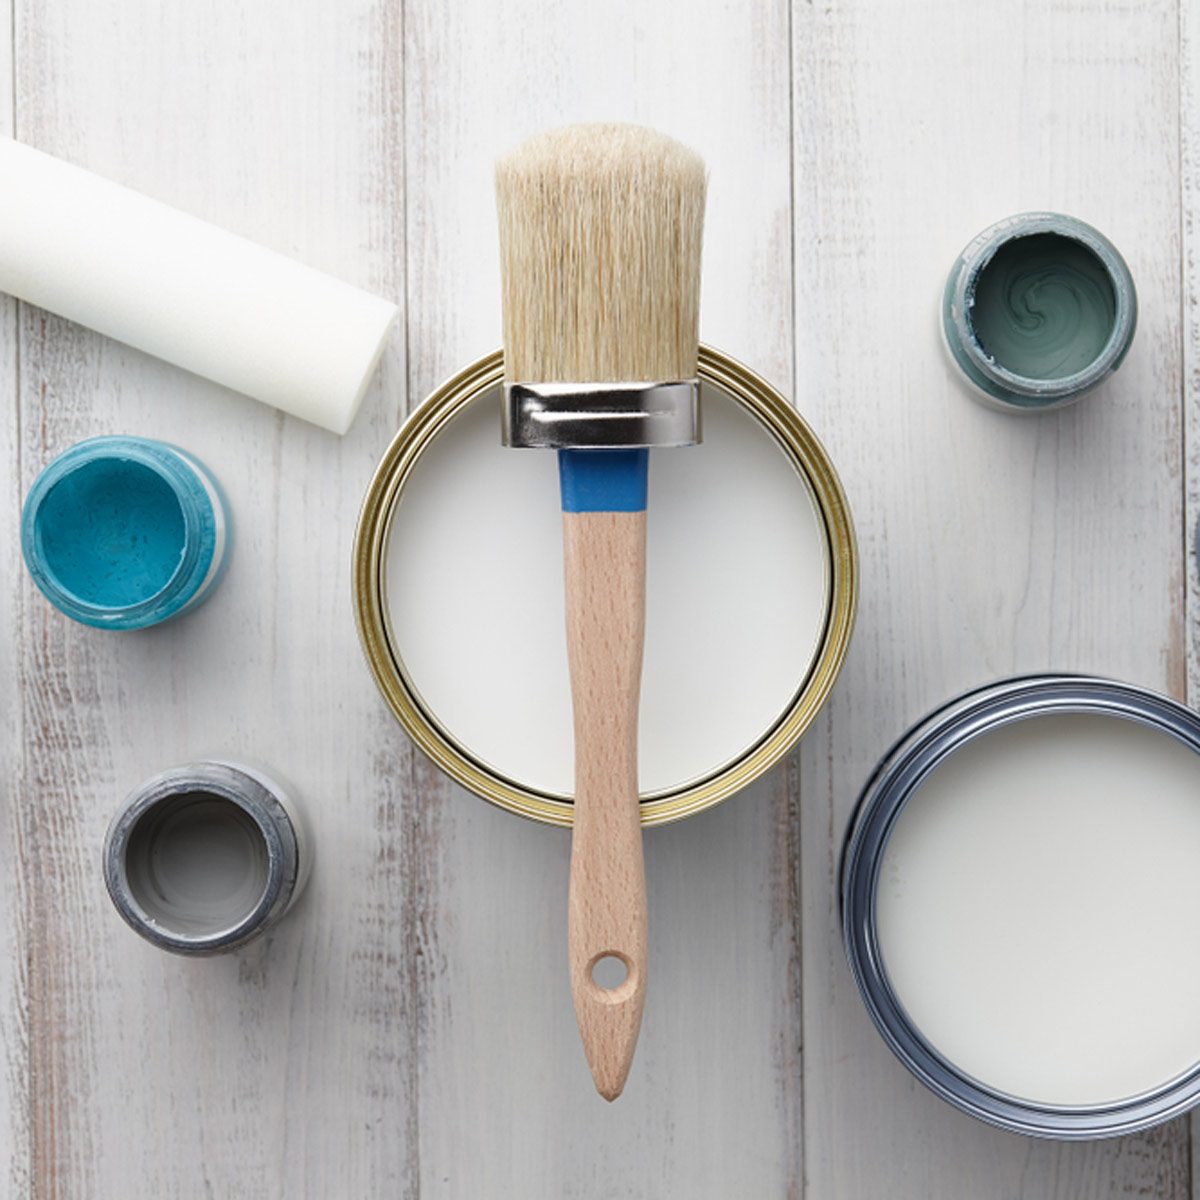 How to Use Chalk Paint (DIY Guide) - Bob Vila